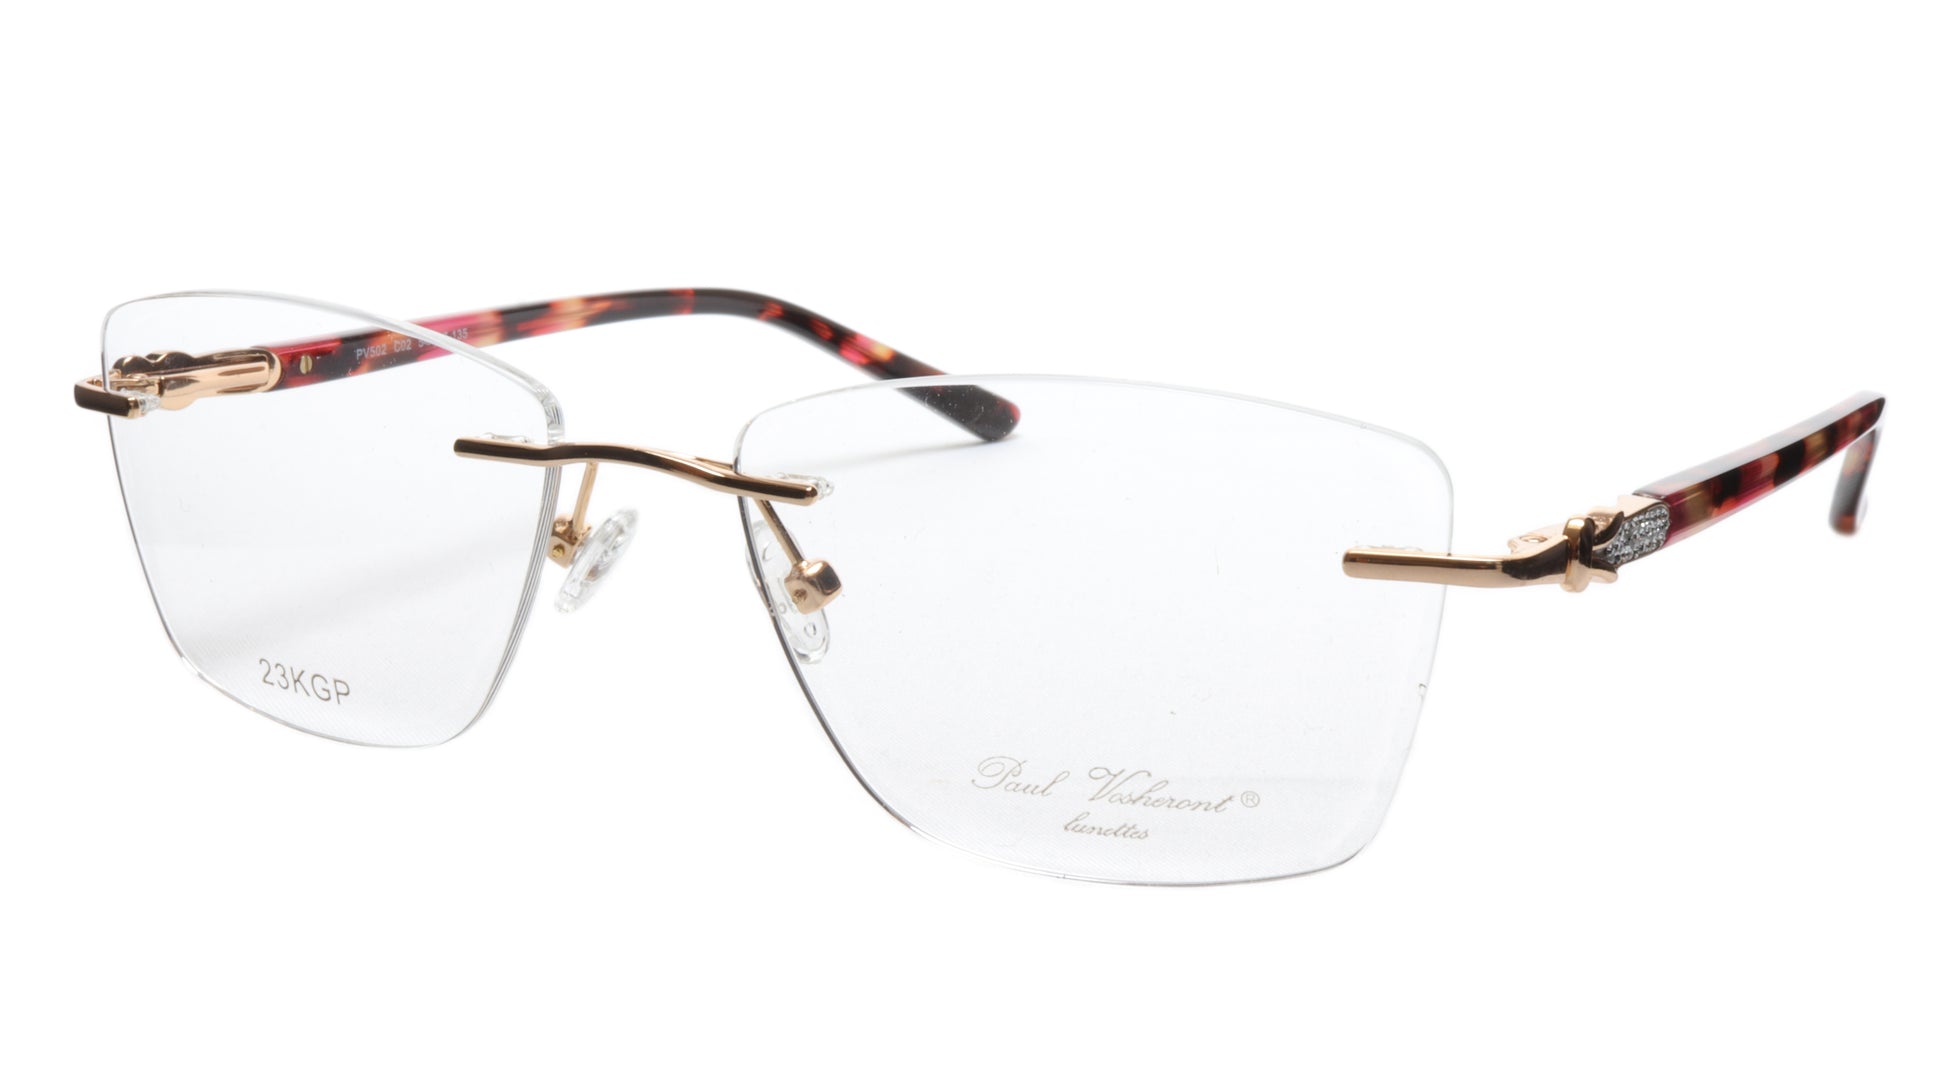 Paul Vosheront Eyeglasses Frame PV502 C02 Gold Plated Acetate Italy 54-17-135 37 - Frame Bay